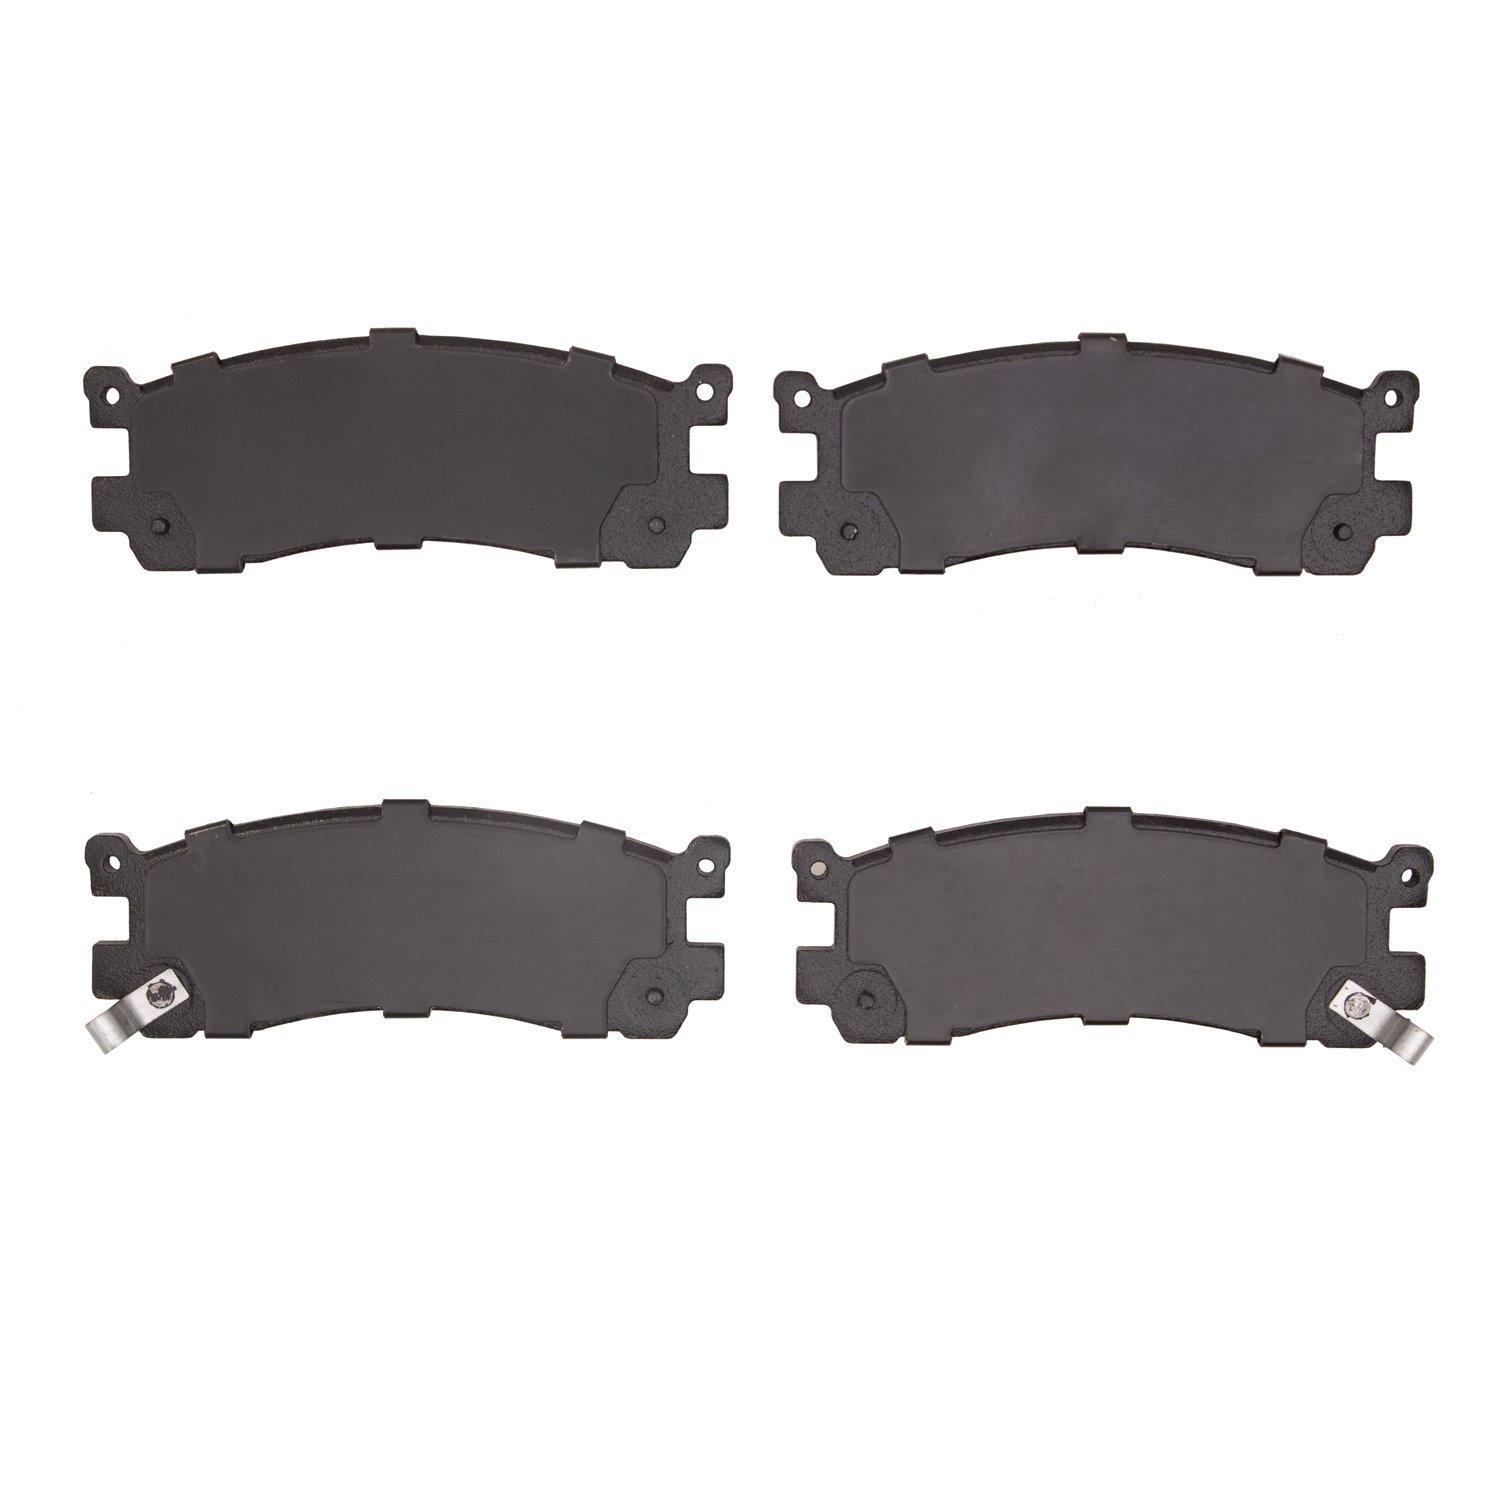 1551-0553-00 5000 Advanced Ceramic Brake Pads, 1992-2002 Ford/Lincoln/Mercury/Mazda, Position: Rear